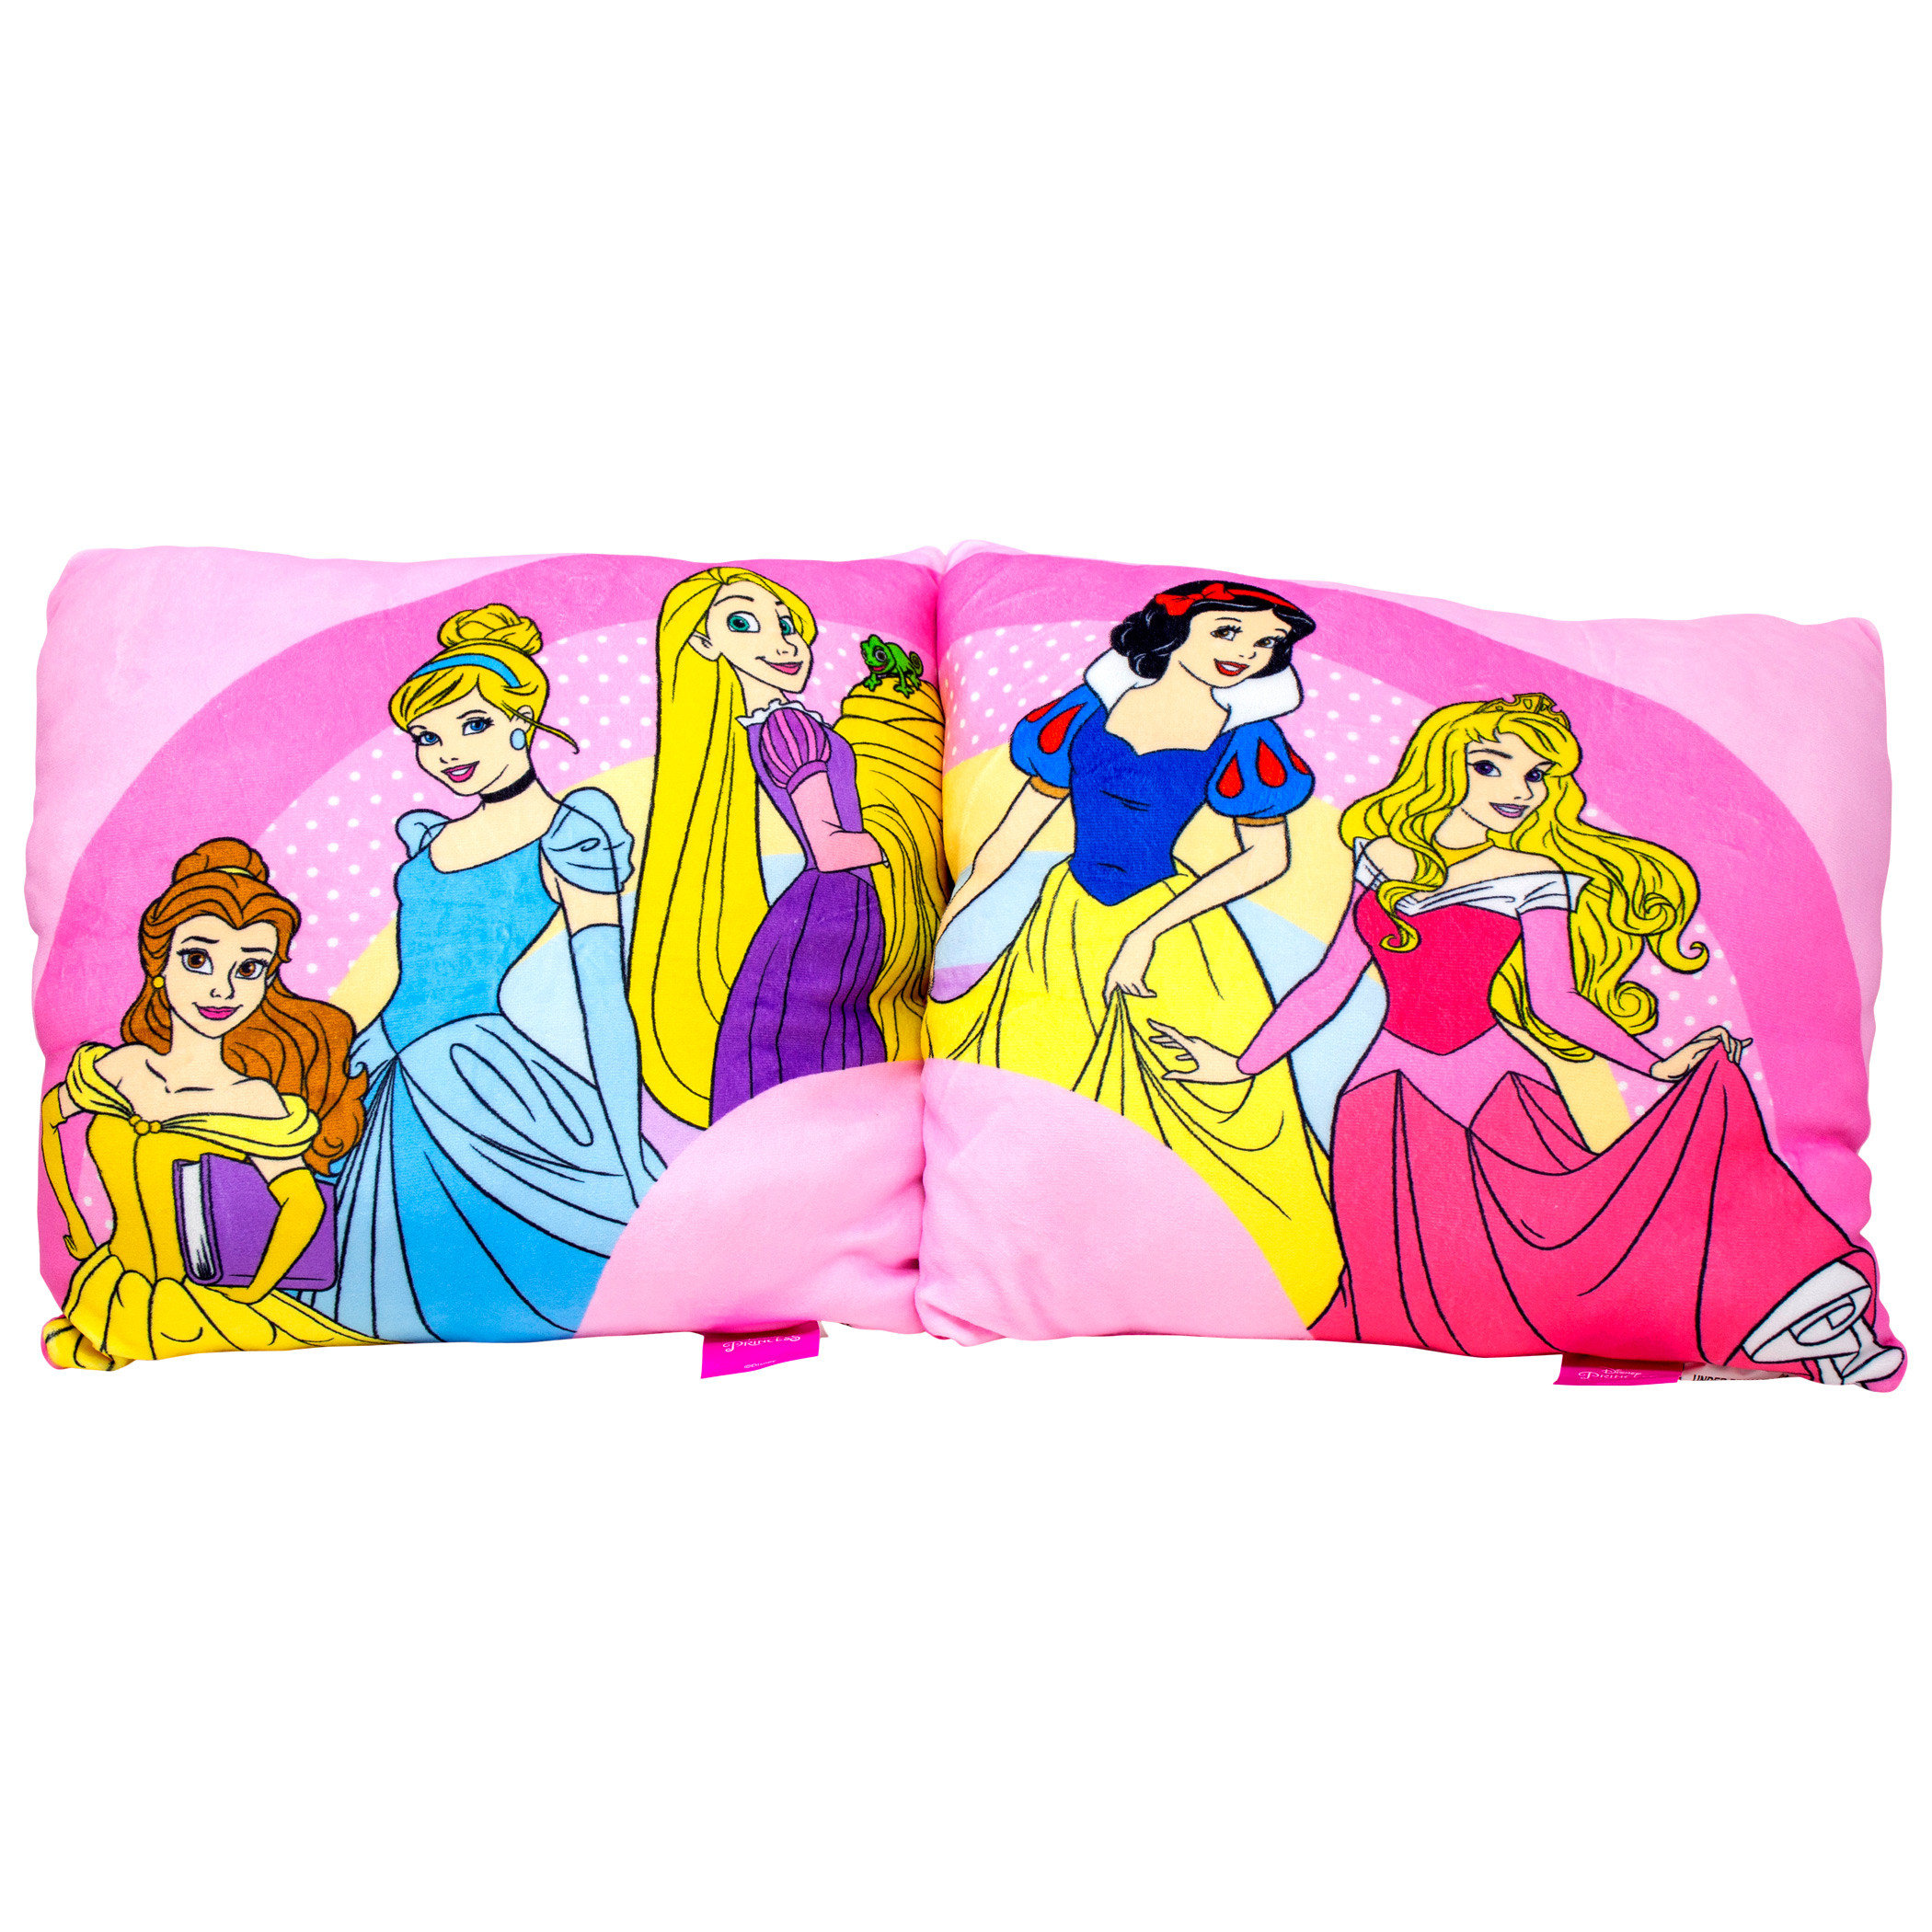 Disney Princess Group Shot 2-Piece Squishy Pillows